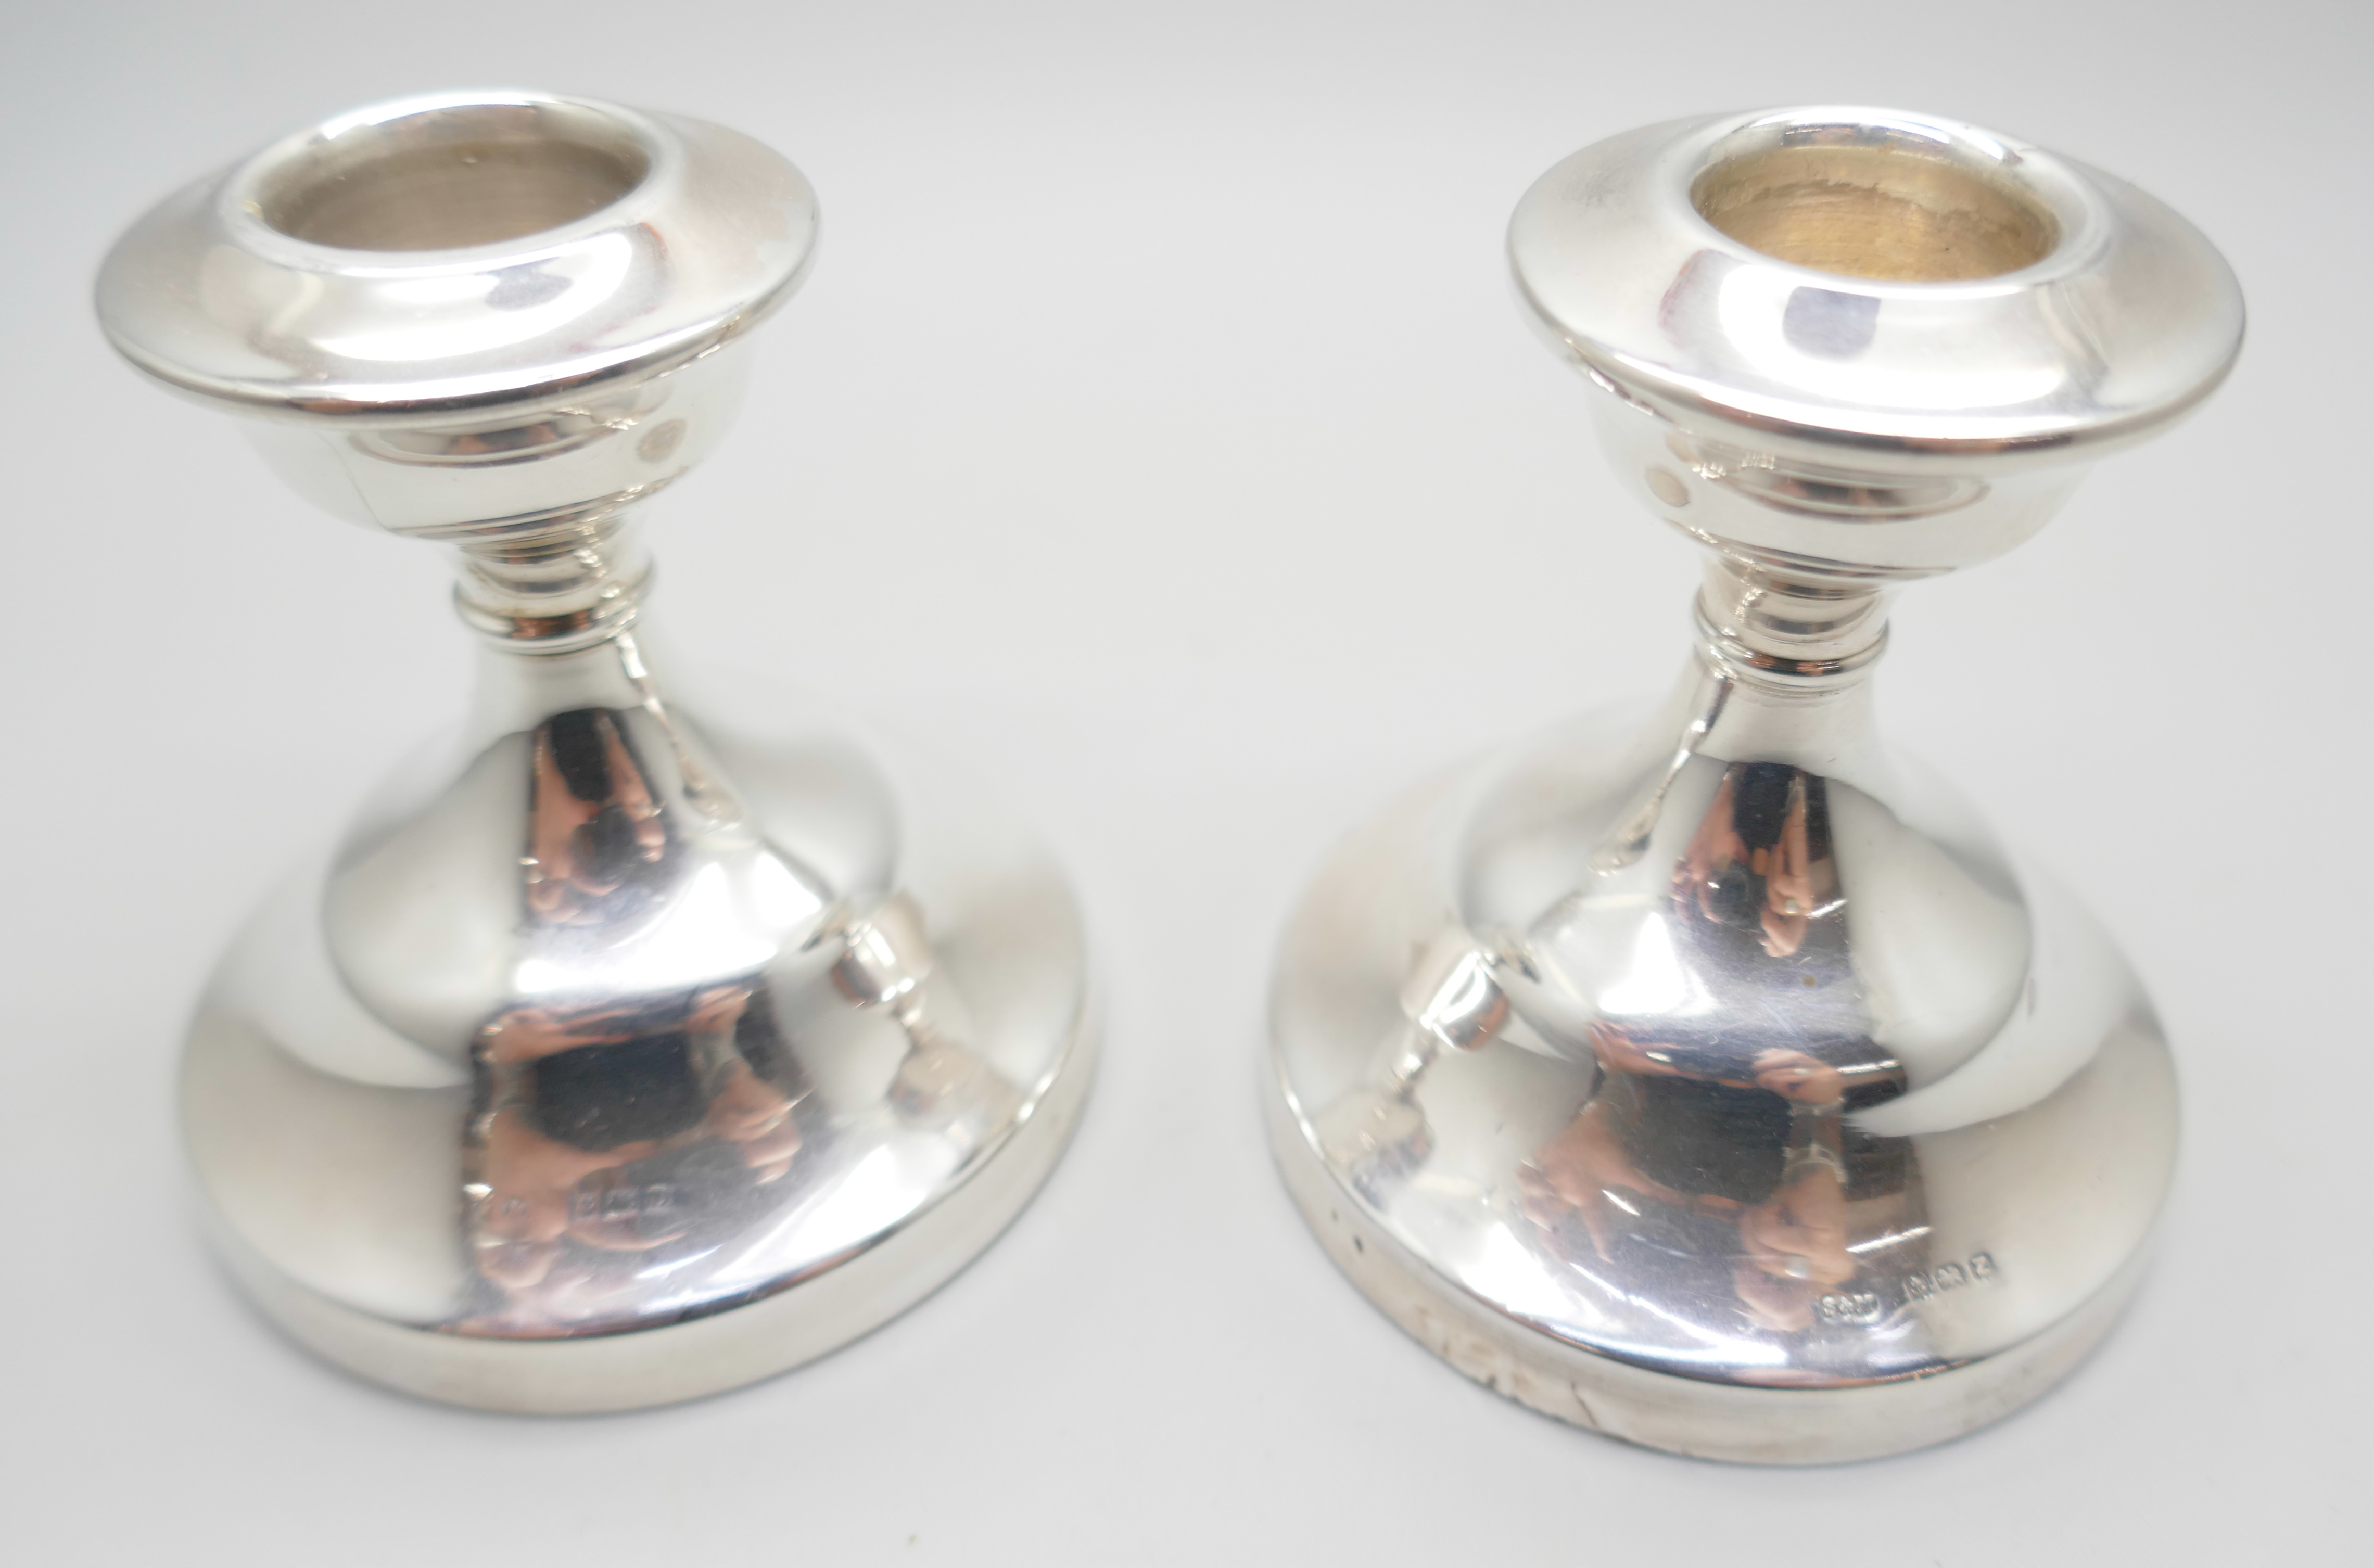 A matched pair of silver dwarf candlesticks